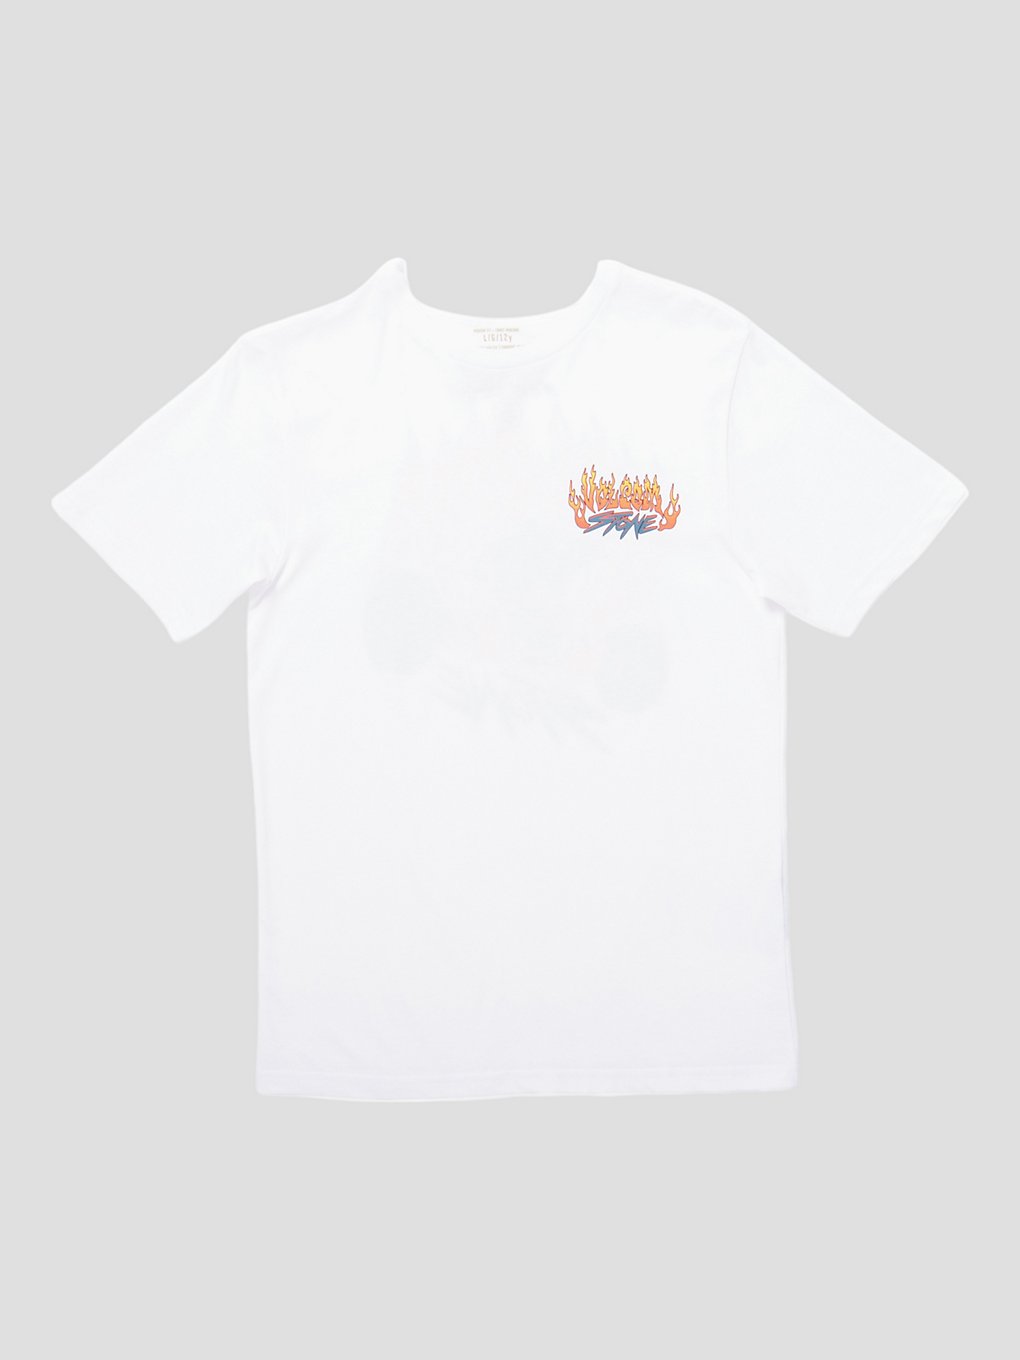 Volcom Trux T-Shirt white kaufen